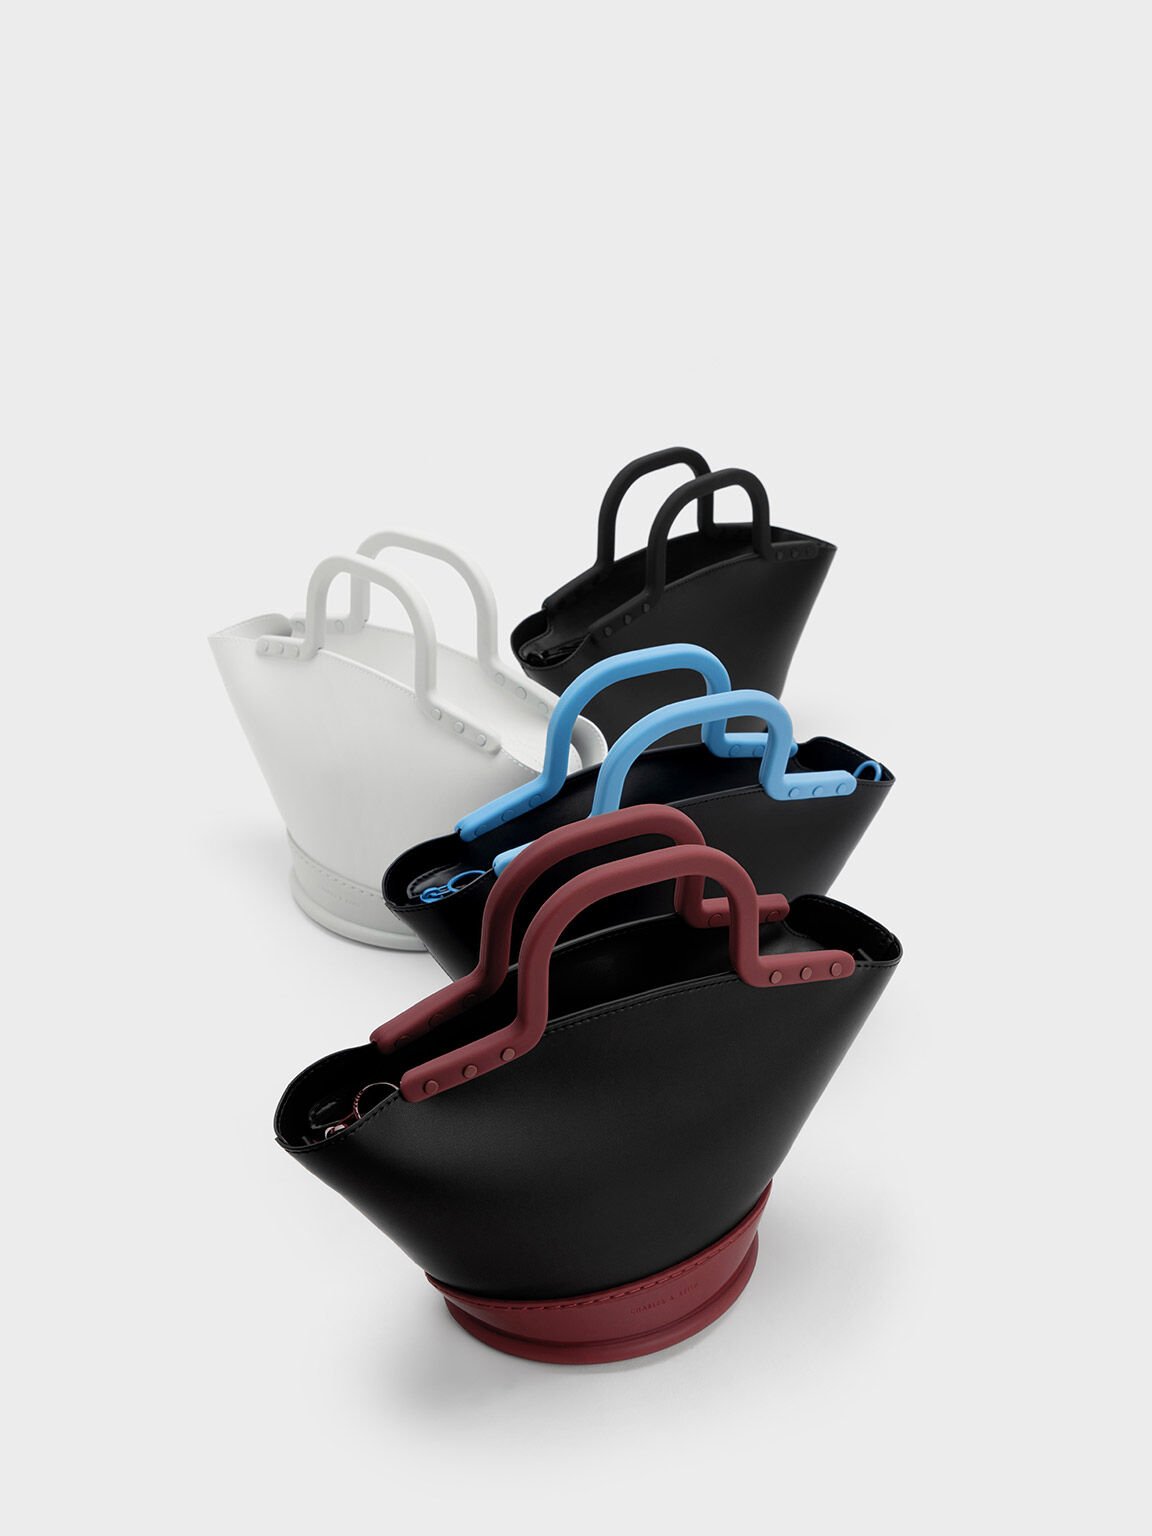 Double top handle tote bag – SCHANTY